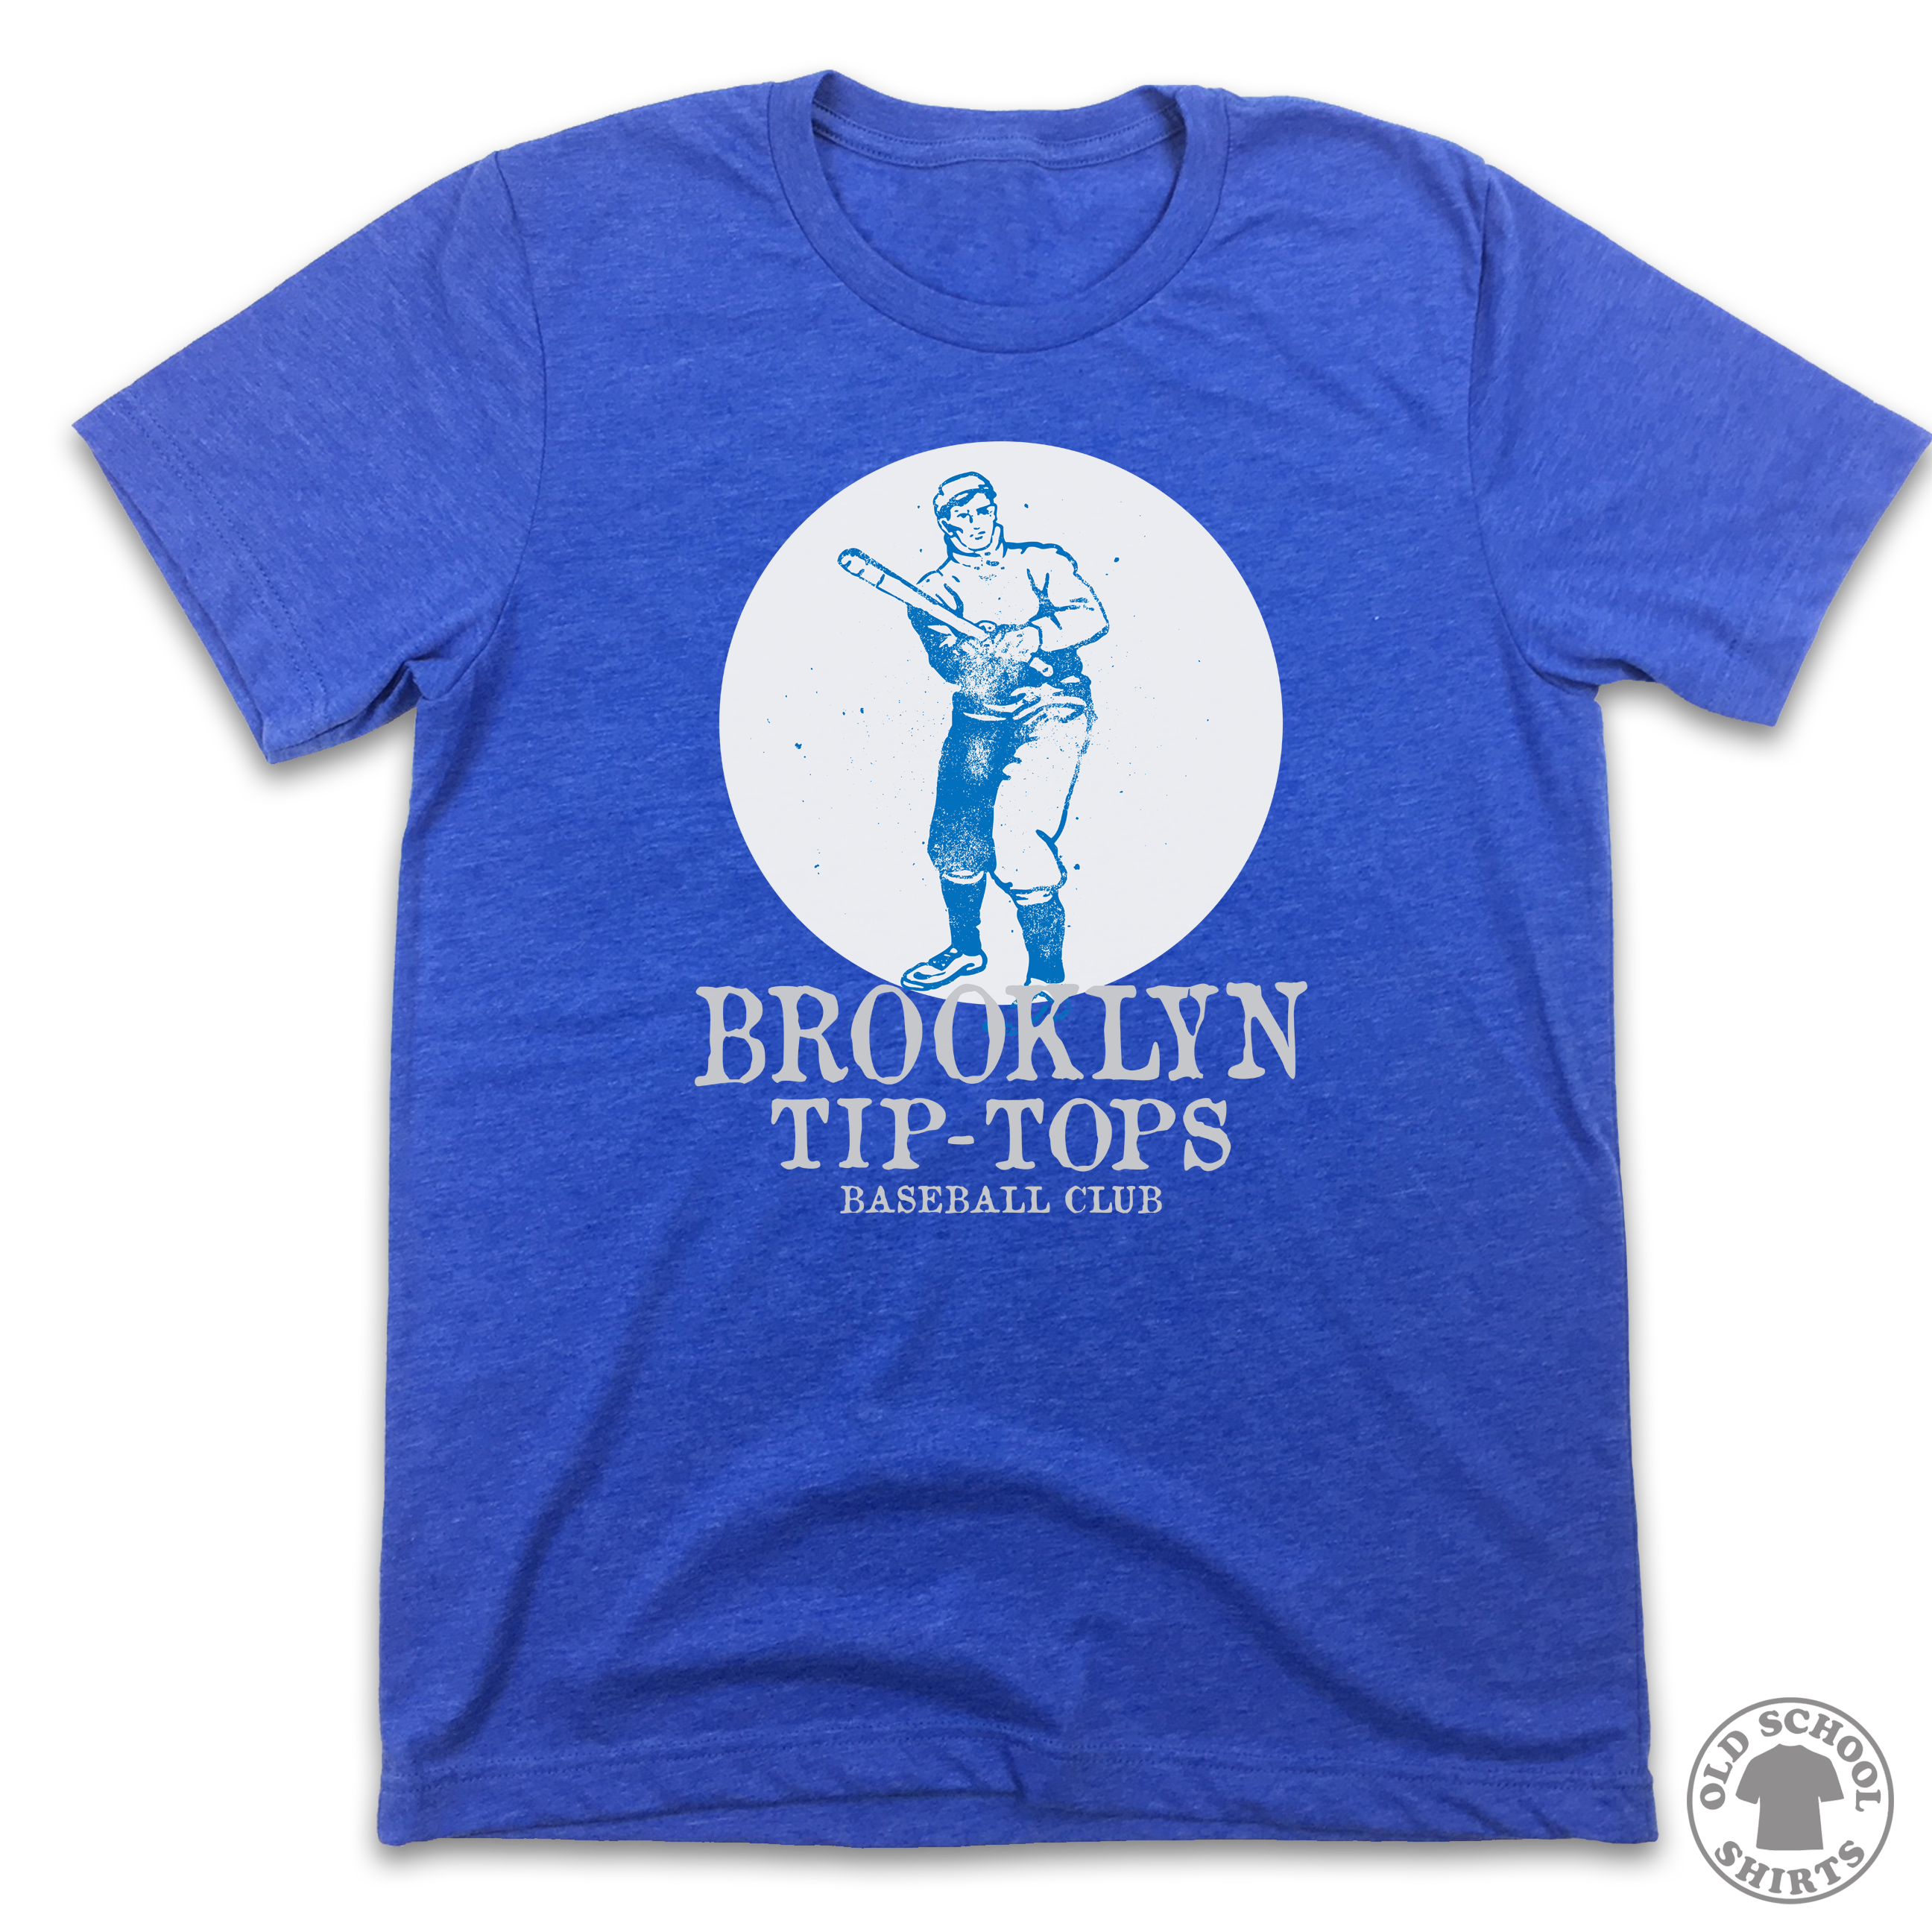 Brooklyn Tip-Tops - Old School Shirts- Retro Sports T Shirts